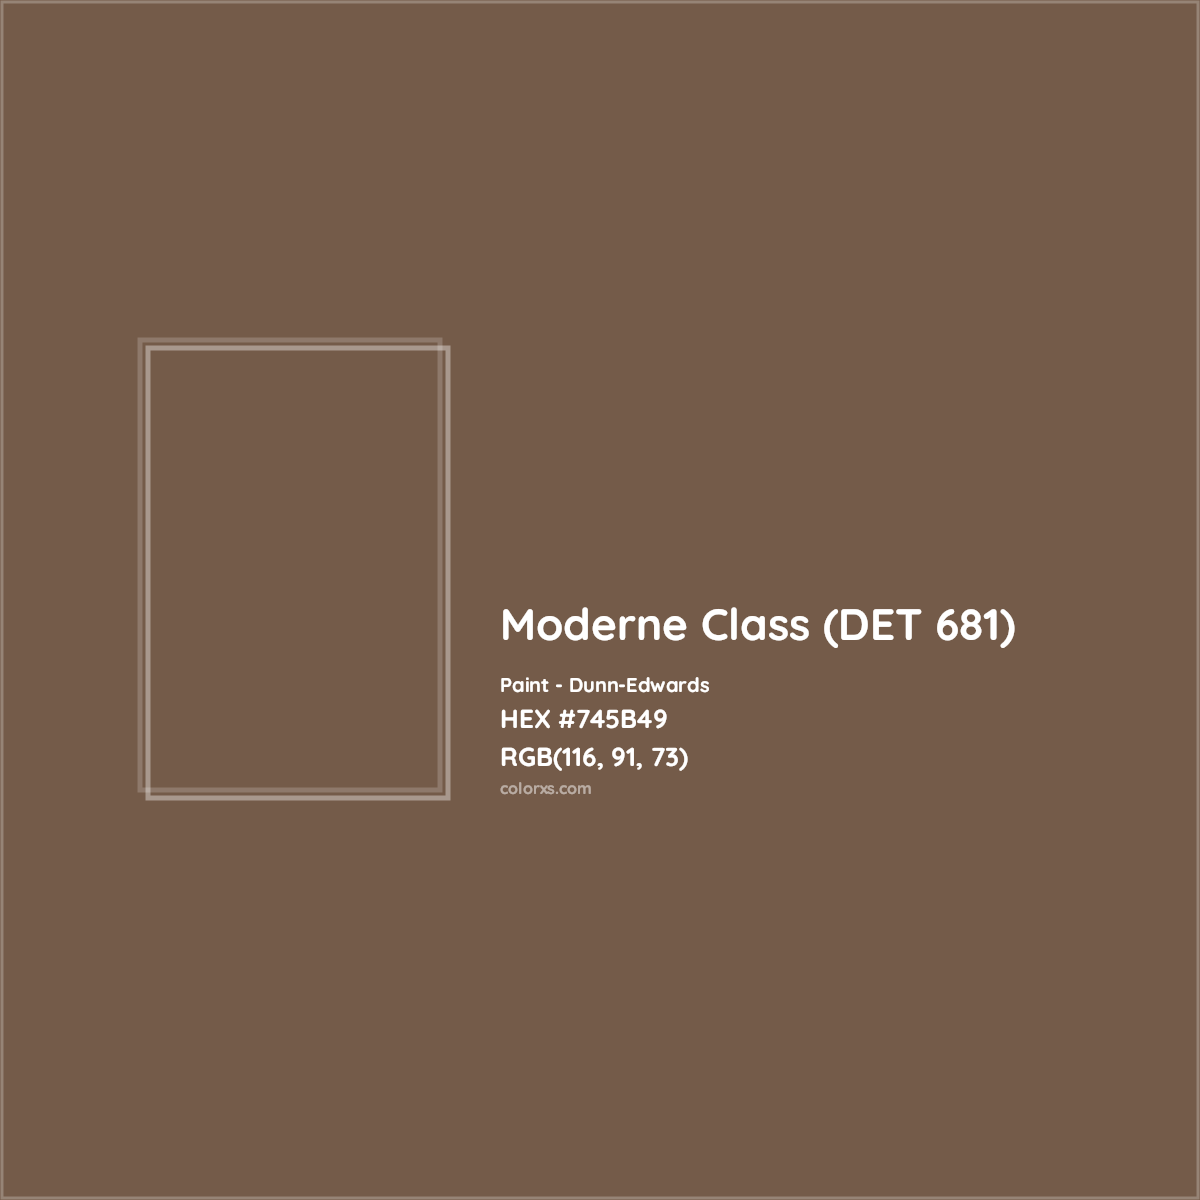 HEX #745B49 Moderne Class (DET 681) Paint Dunn-Edwards - Color Code